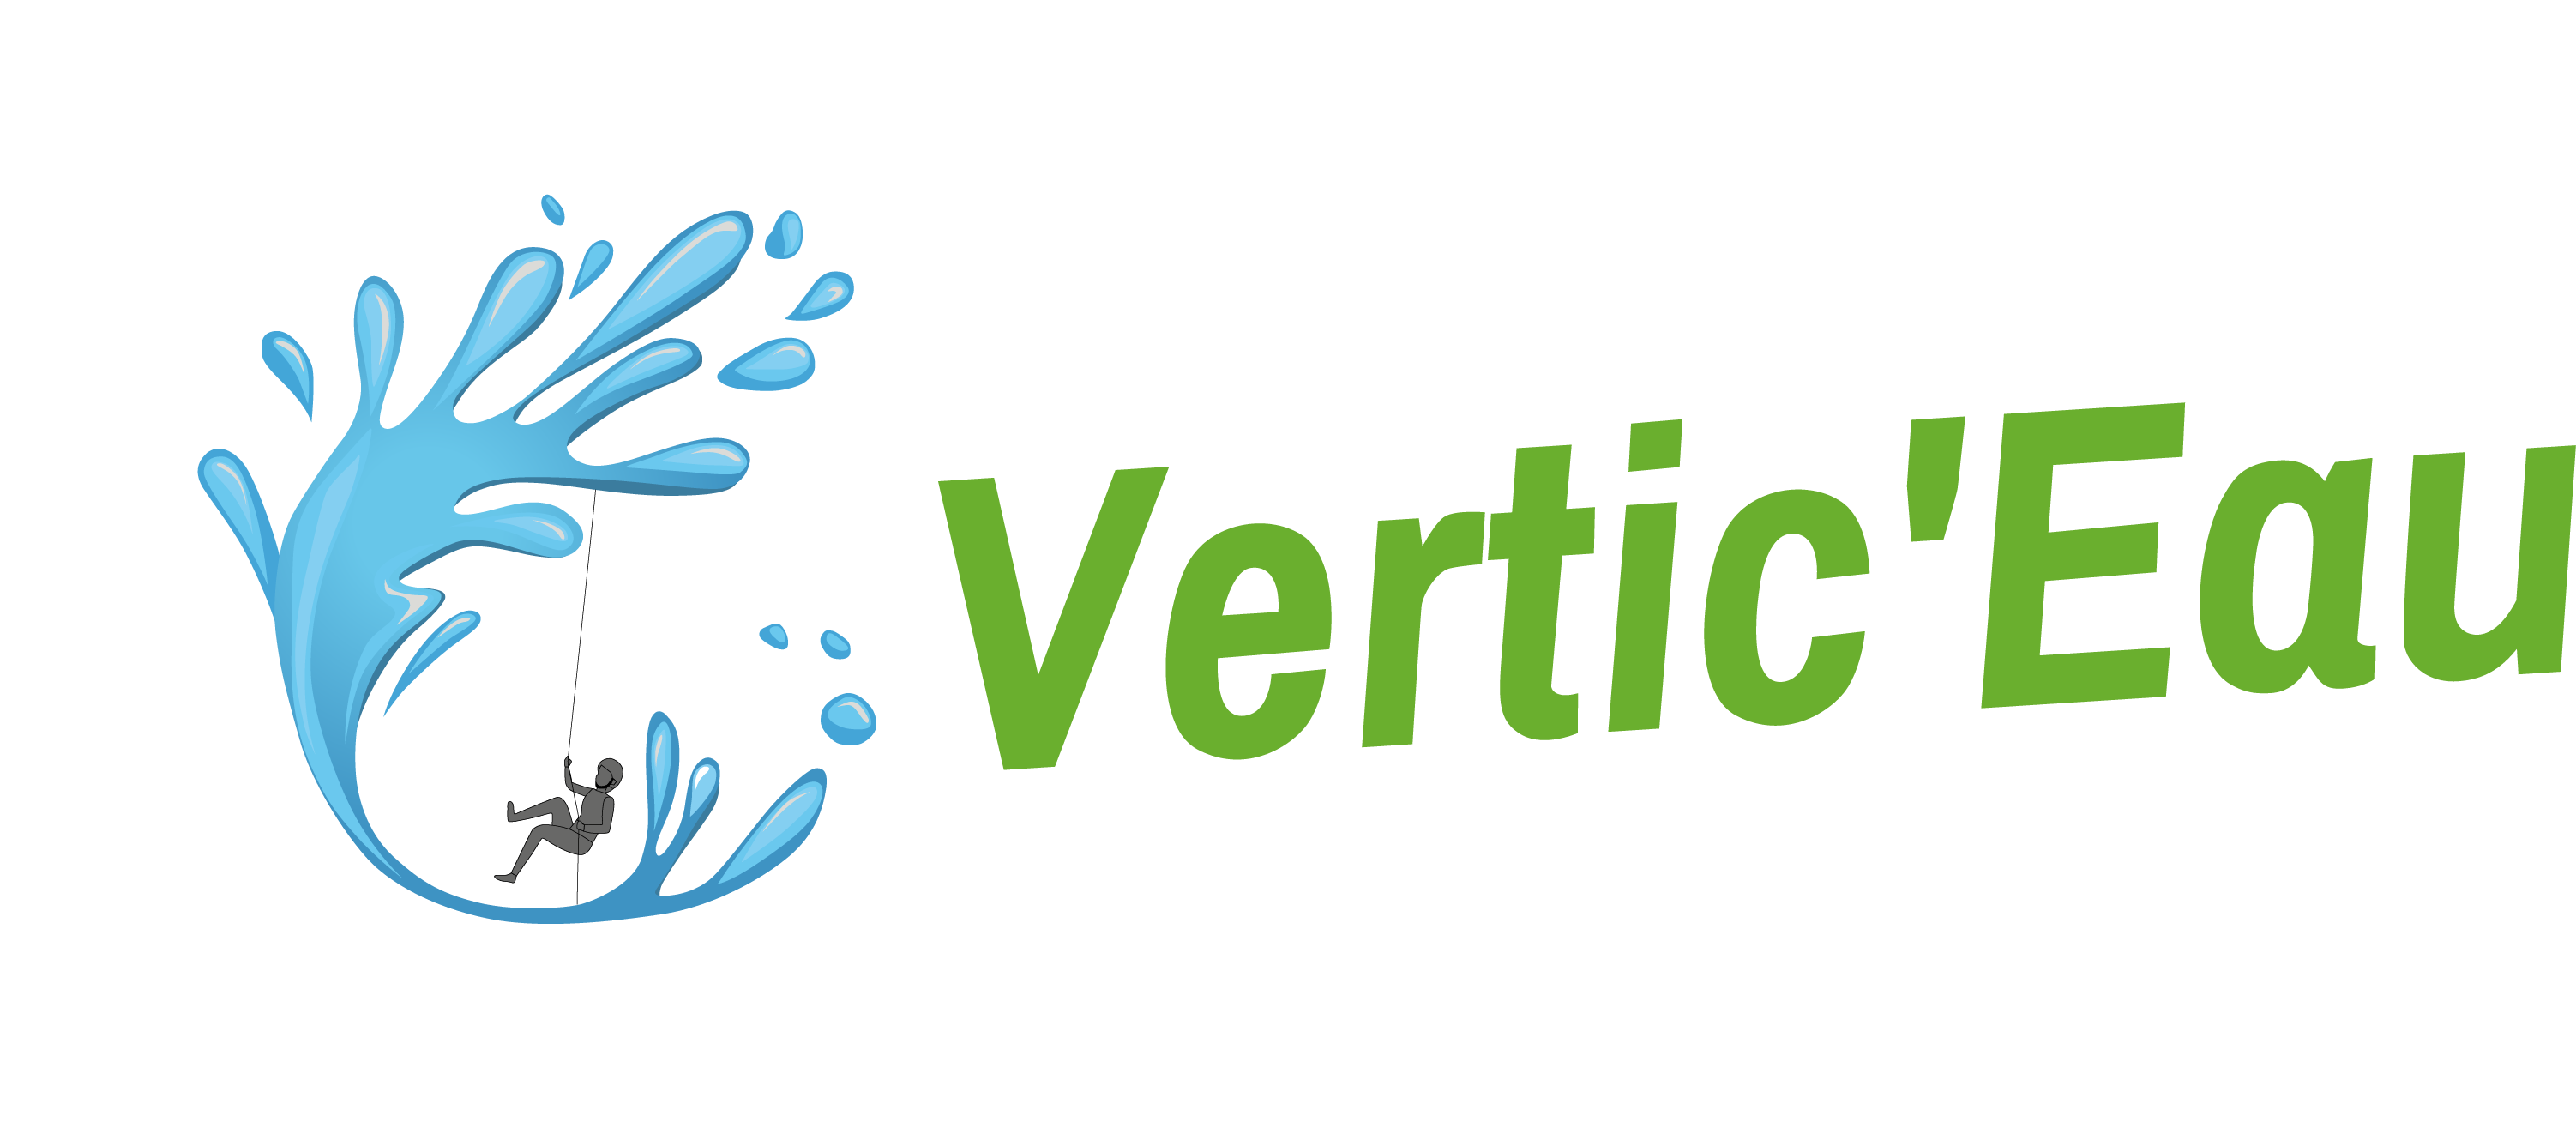 Logo vertic'eau